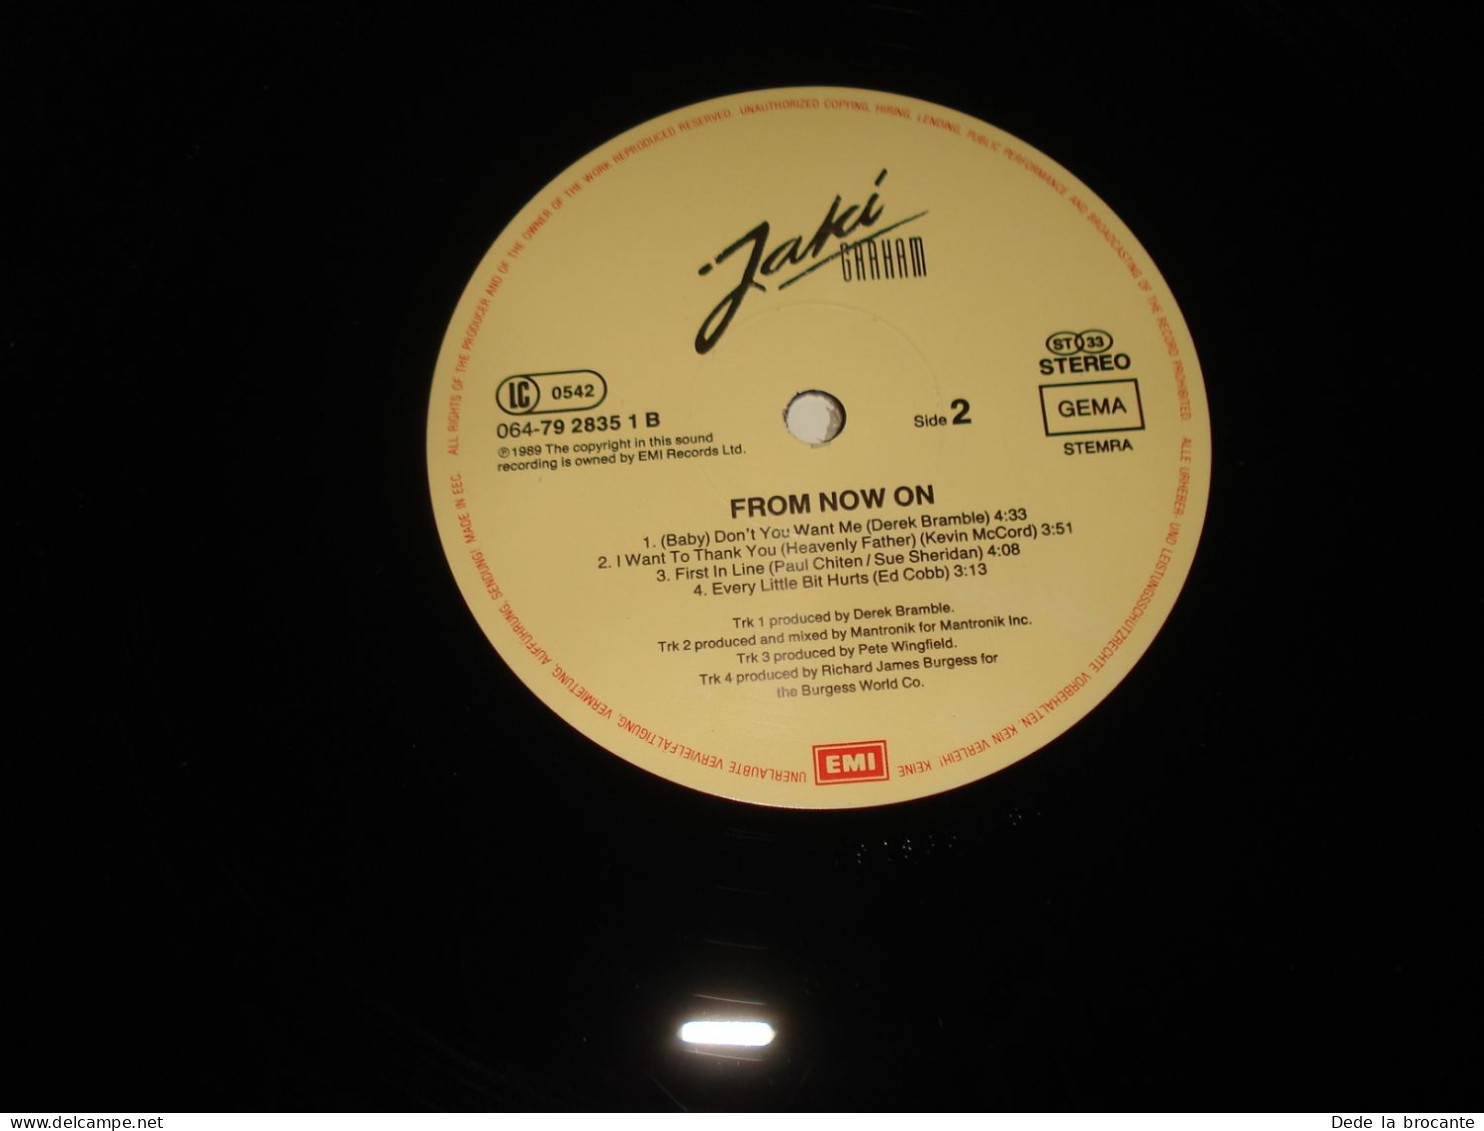 B13 / Jaki Graham – From Now On - EMI – 064 7 92835 1 - EUROPE 1989  EX/VG++ - Disco & Pop